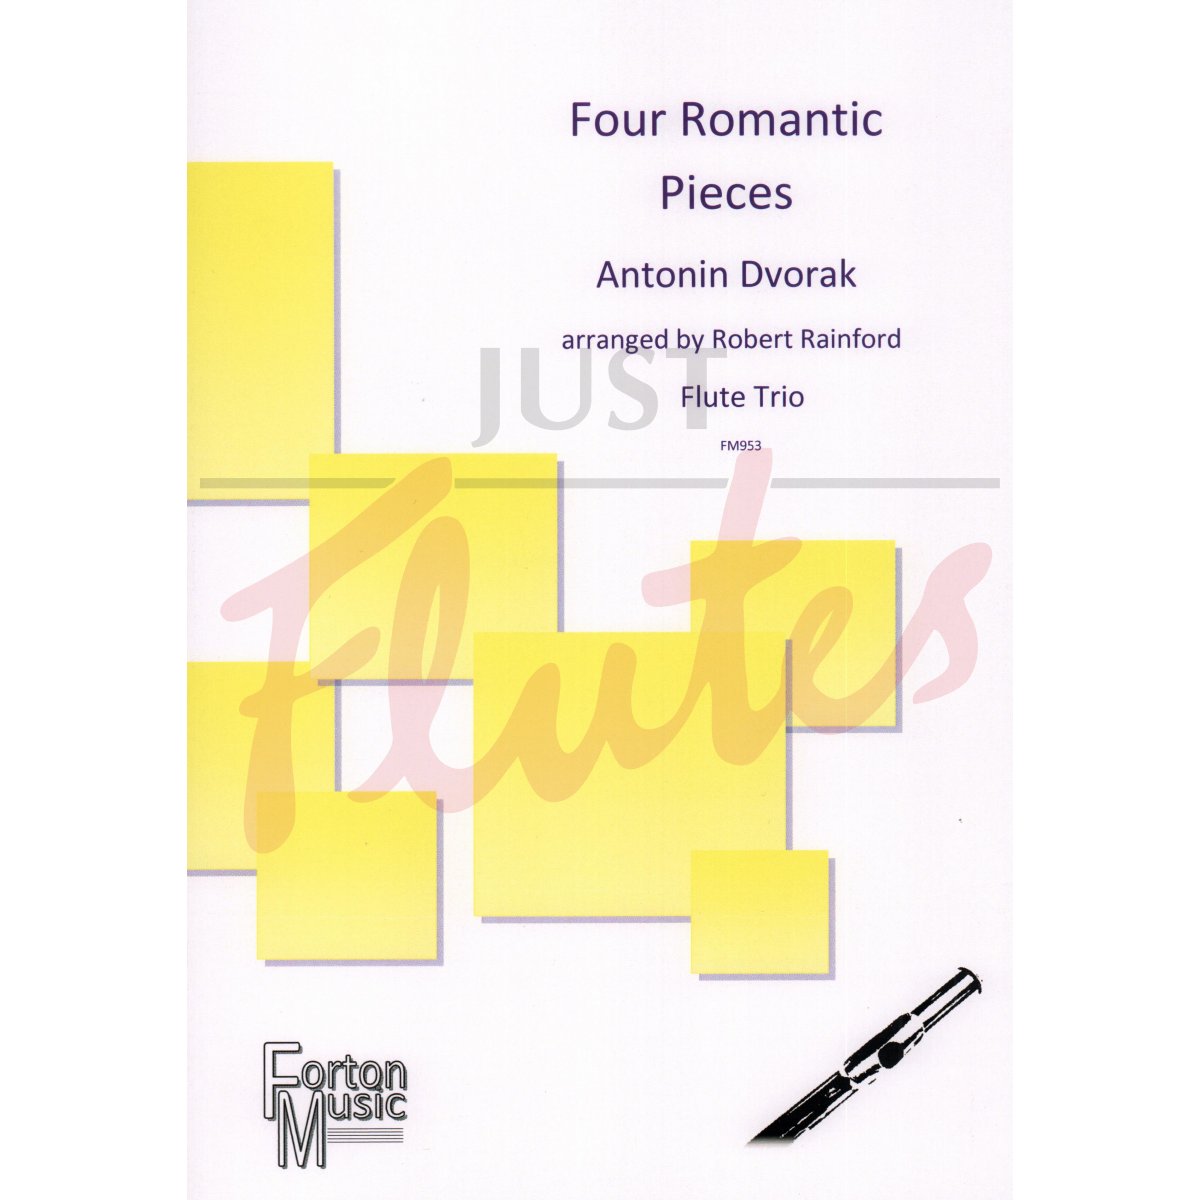 Four Romantic Pieces arranged for Flute Trio